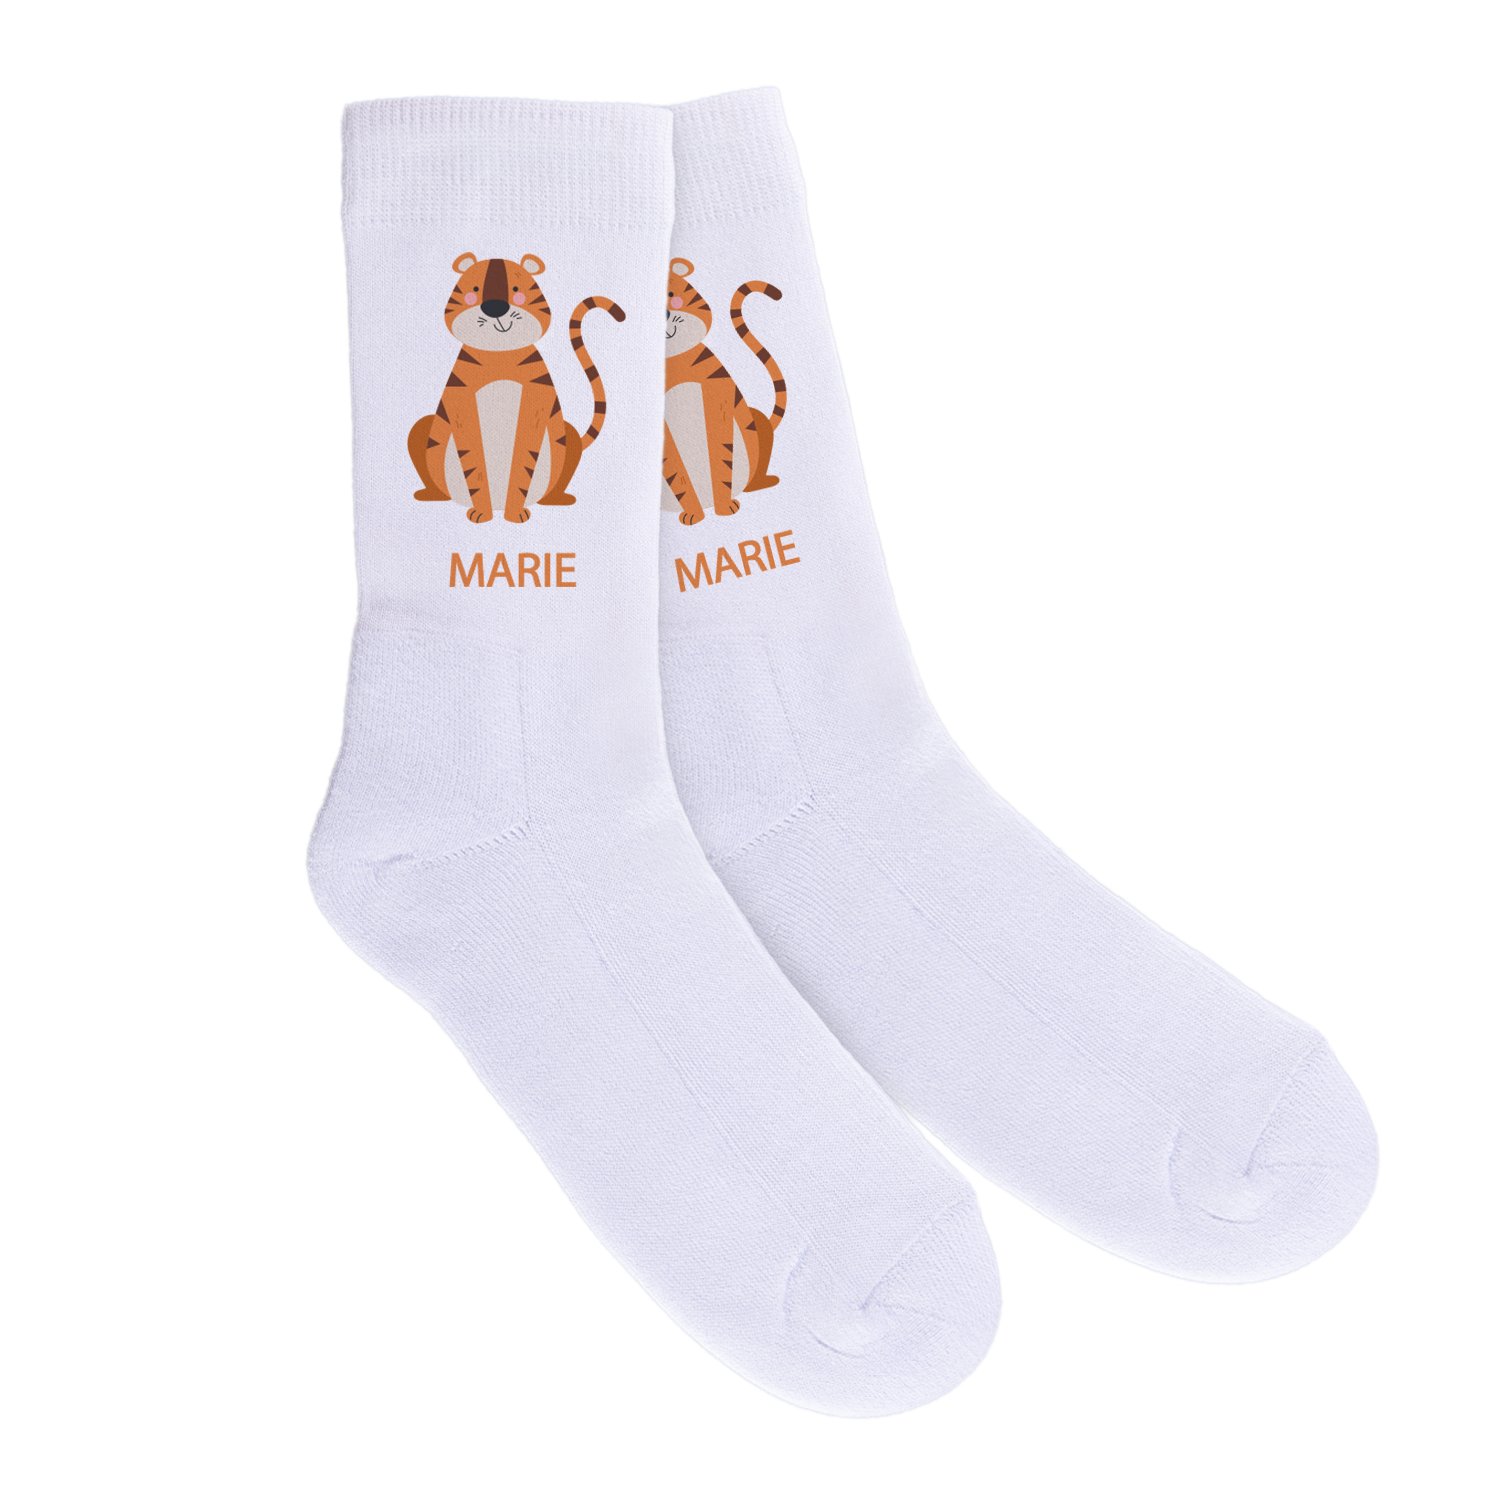 Personalisierbare Socken - Zootiere